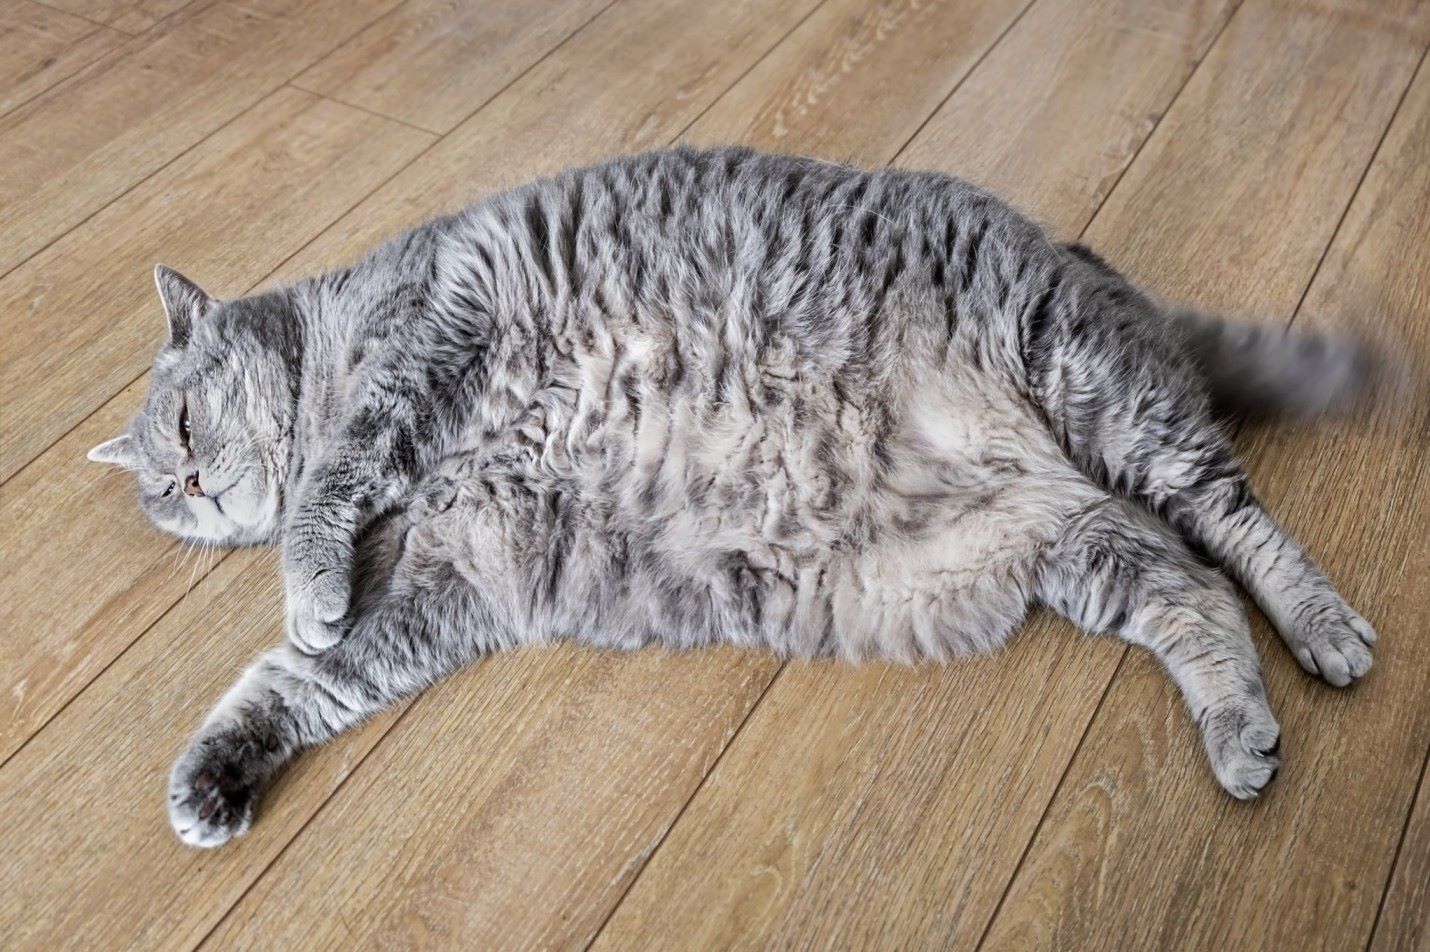 An overweight cat lying on a wooden floor